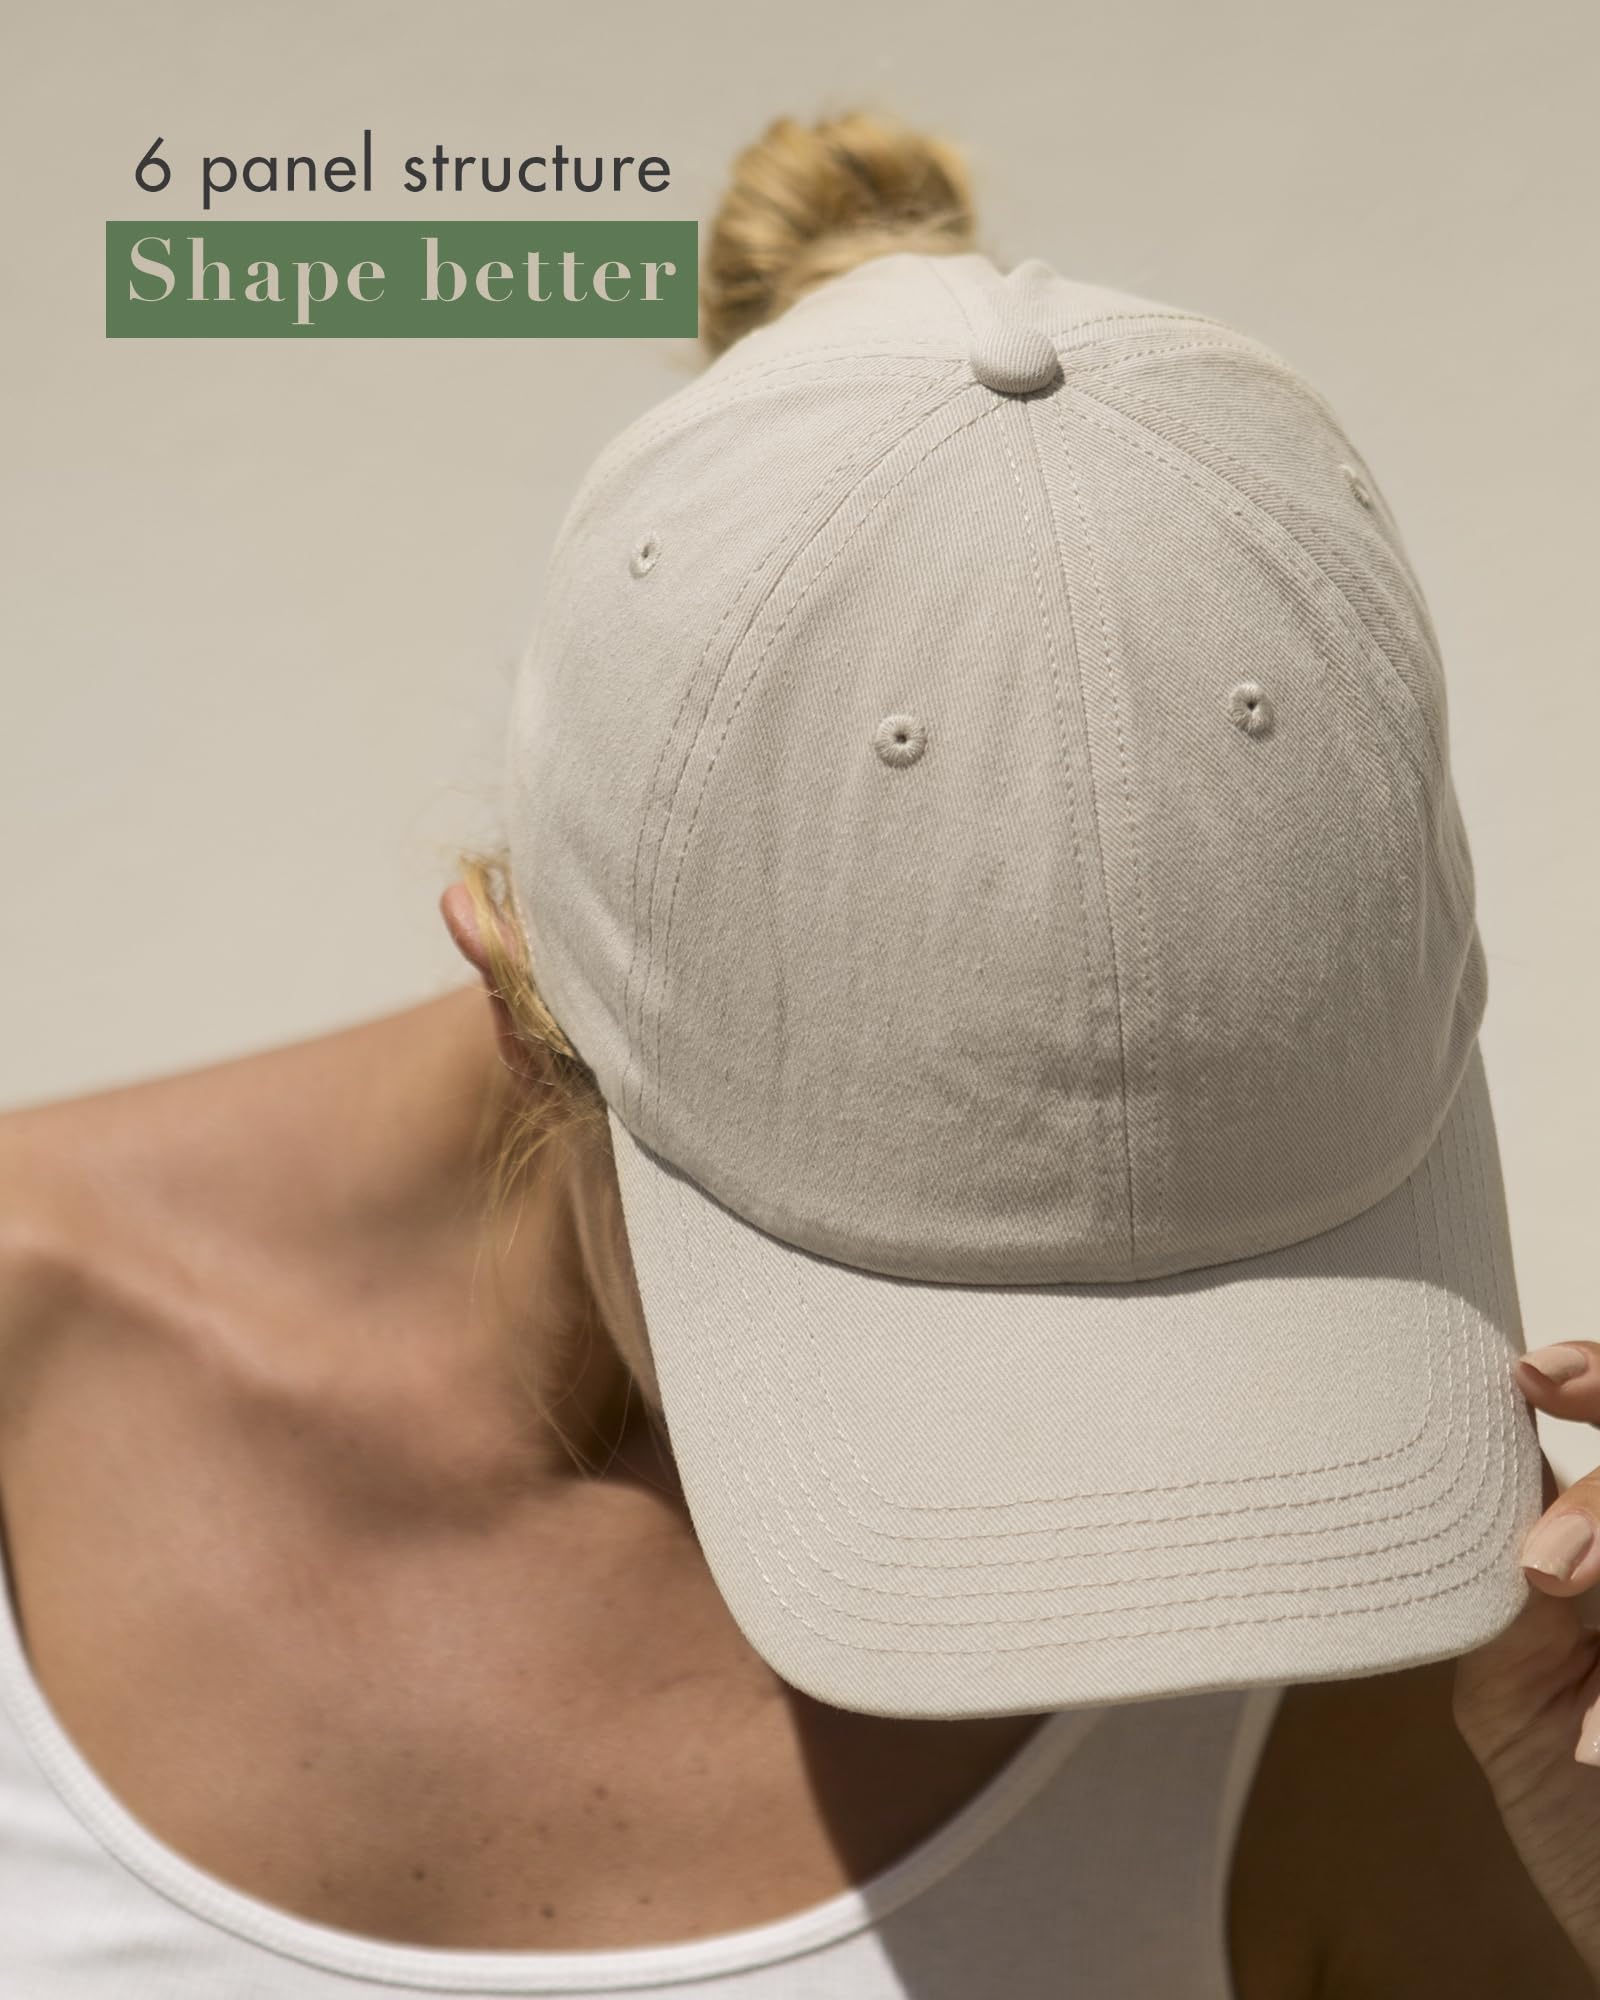 FURTALK Womens Men's Baseball Cap 100% Washed Cotton Soft Cap Adjustable Unisex Unstructured Baseball Hats